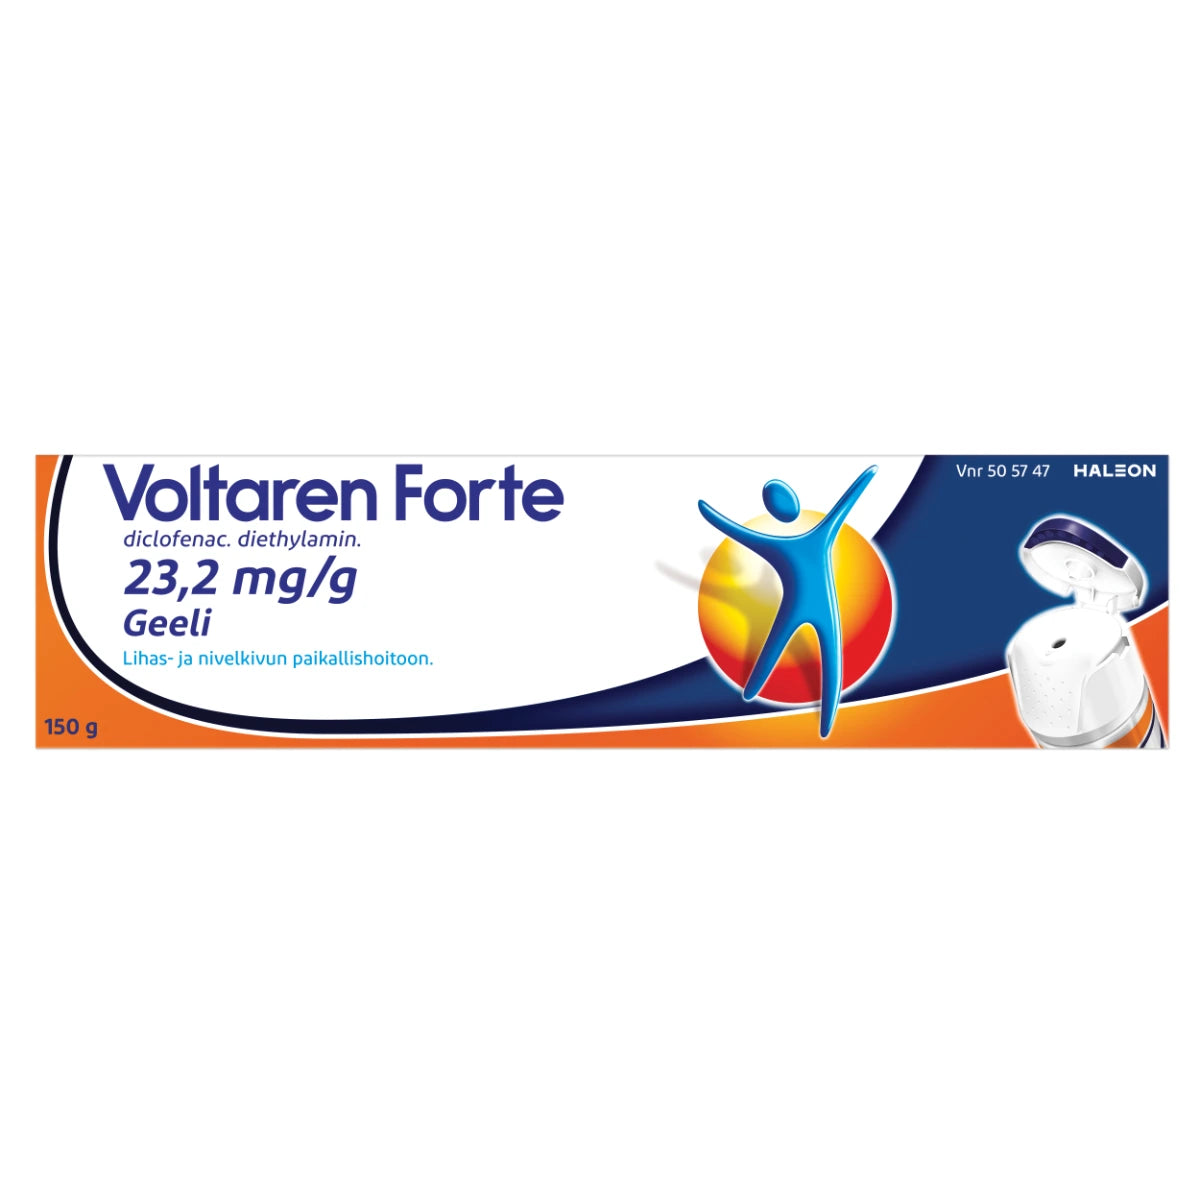 VOLTAREN FORTE 23,2 mg/g geeli 150 g lihas- ja nivelkipuun